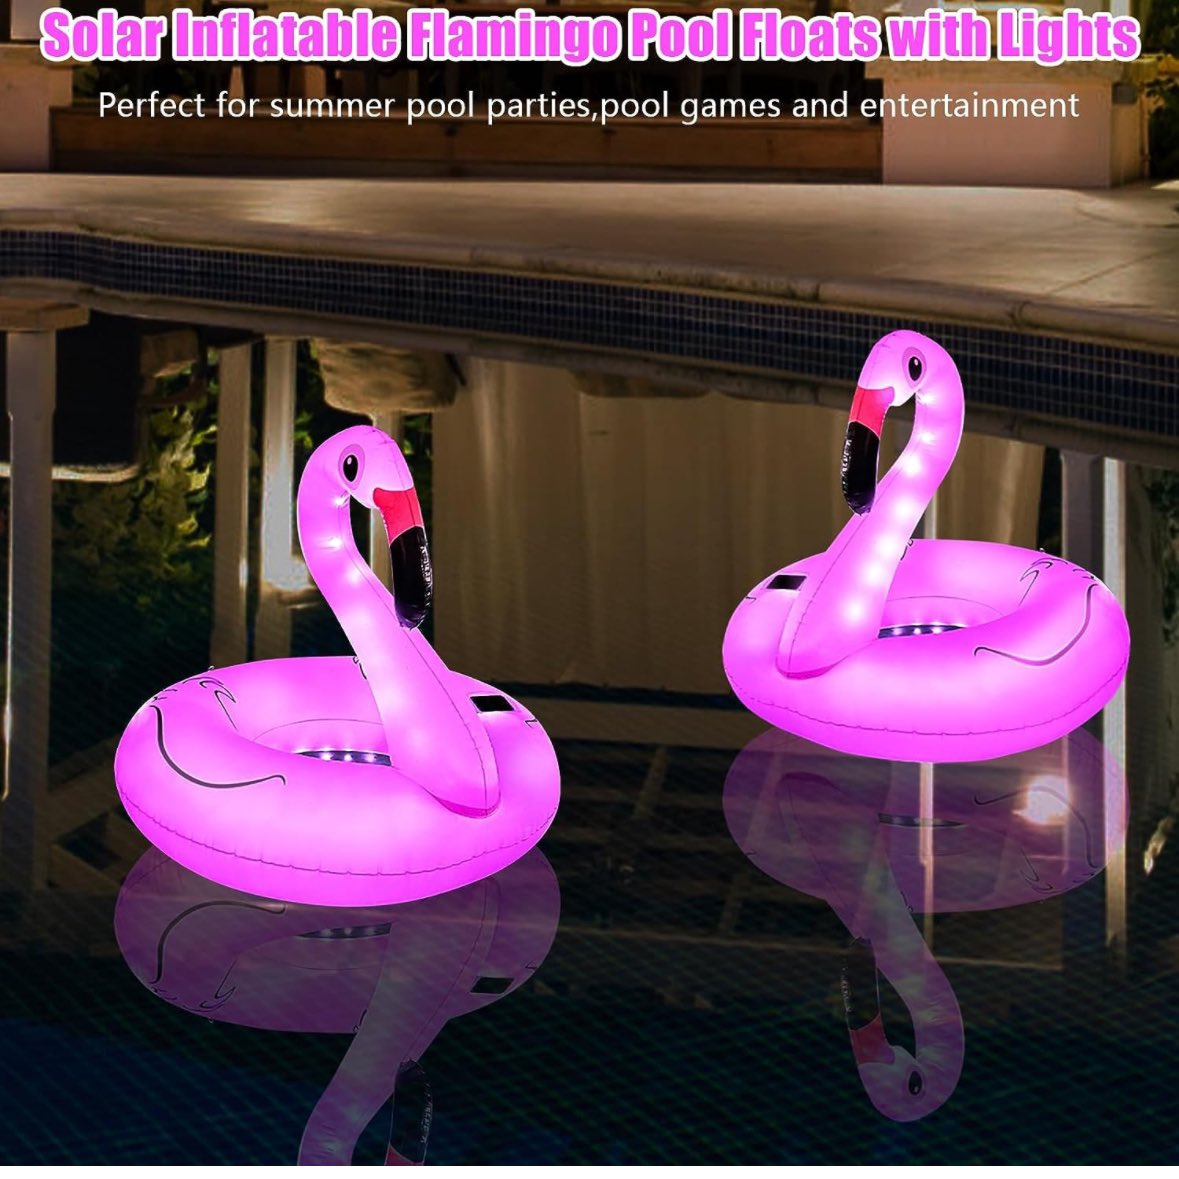 amzn.to/4amsdYR #solar #flamingos #inflatable #pool #poolfloat #lights #summer #summerfinds #need #PoolSeason